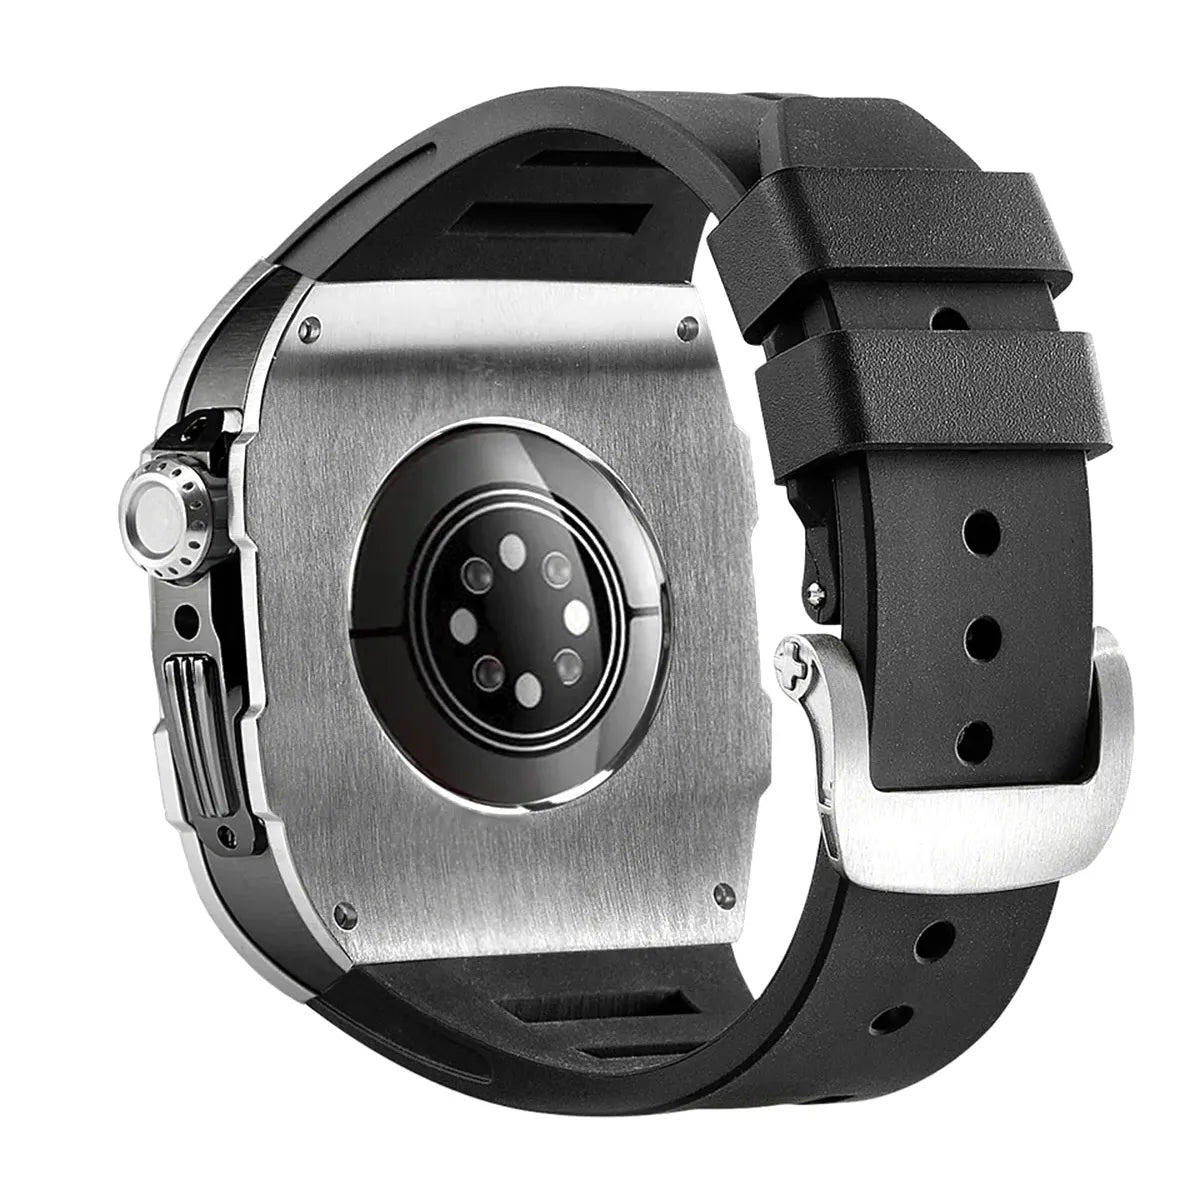 Stainless Steel Apple Watch Case Retrofit Kit